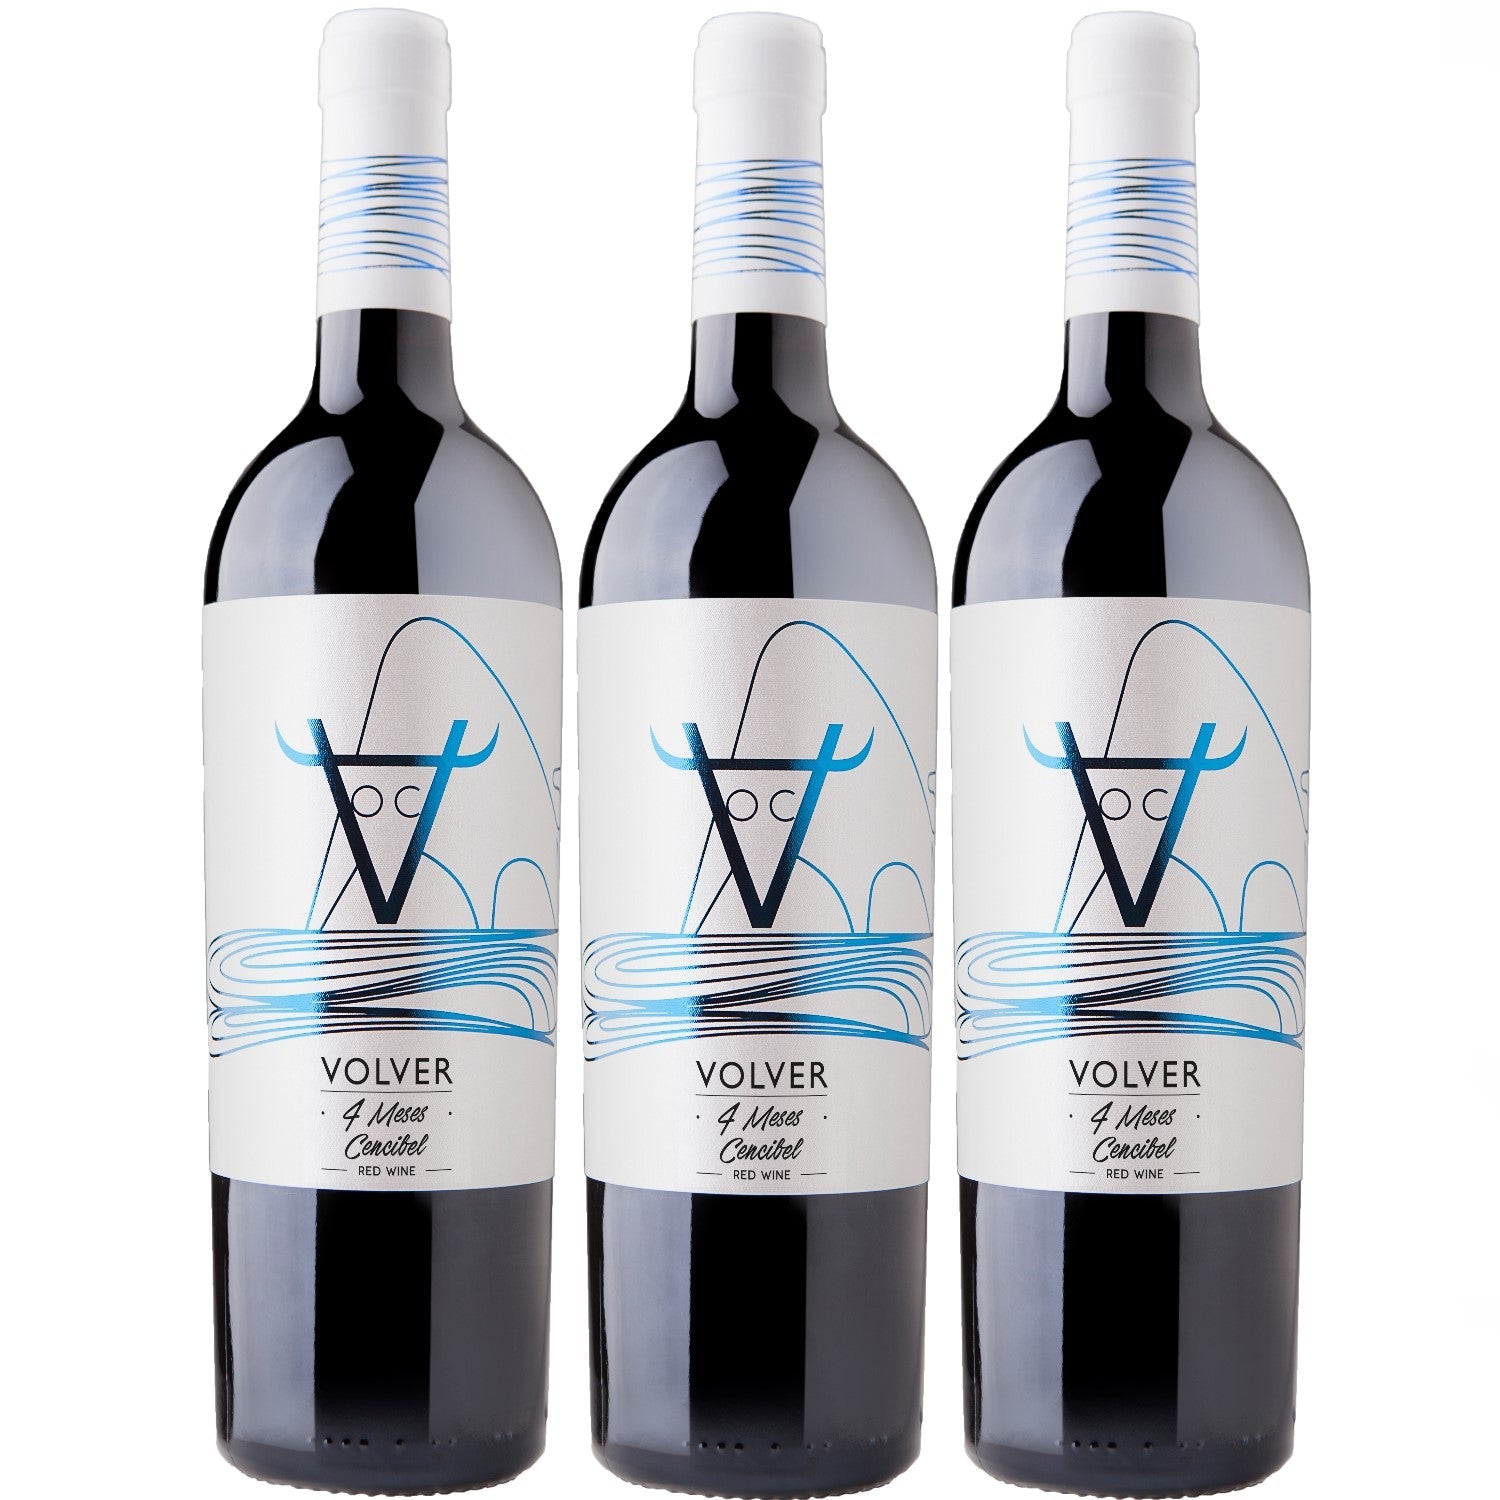 Bodegas Volver 4 Meses Cencibel Vdt Castilla Rotwein Wein trocken Spanien (3 x 0.75l) - Versanel -